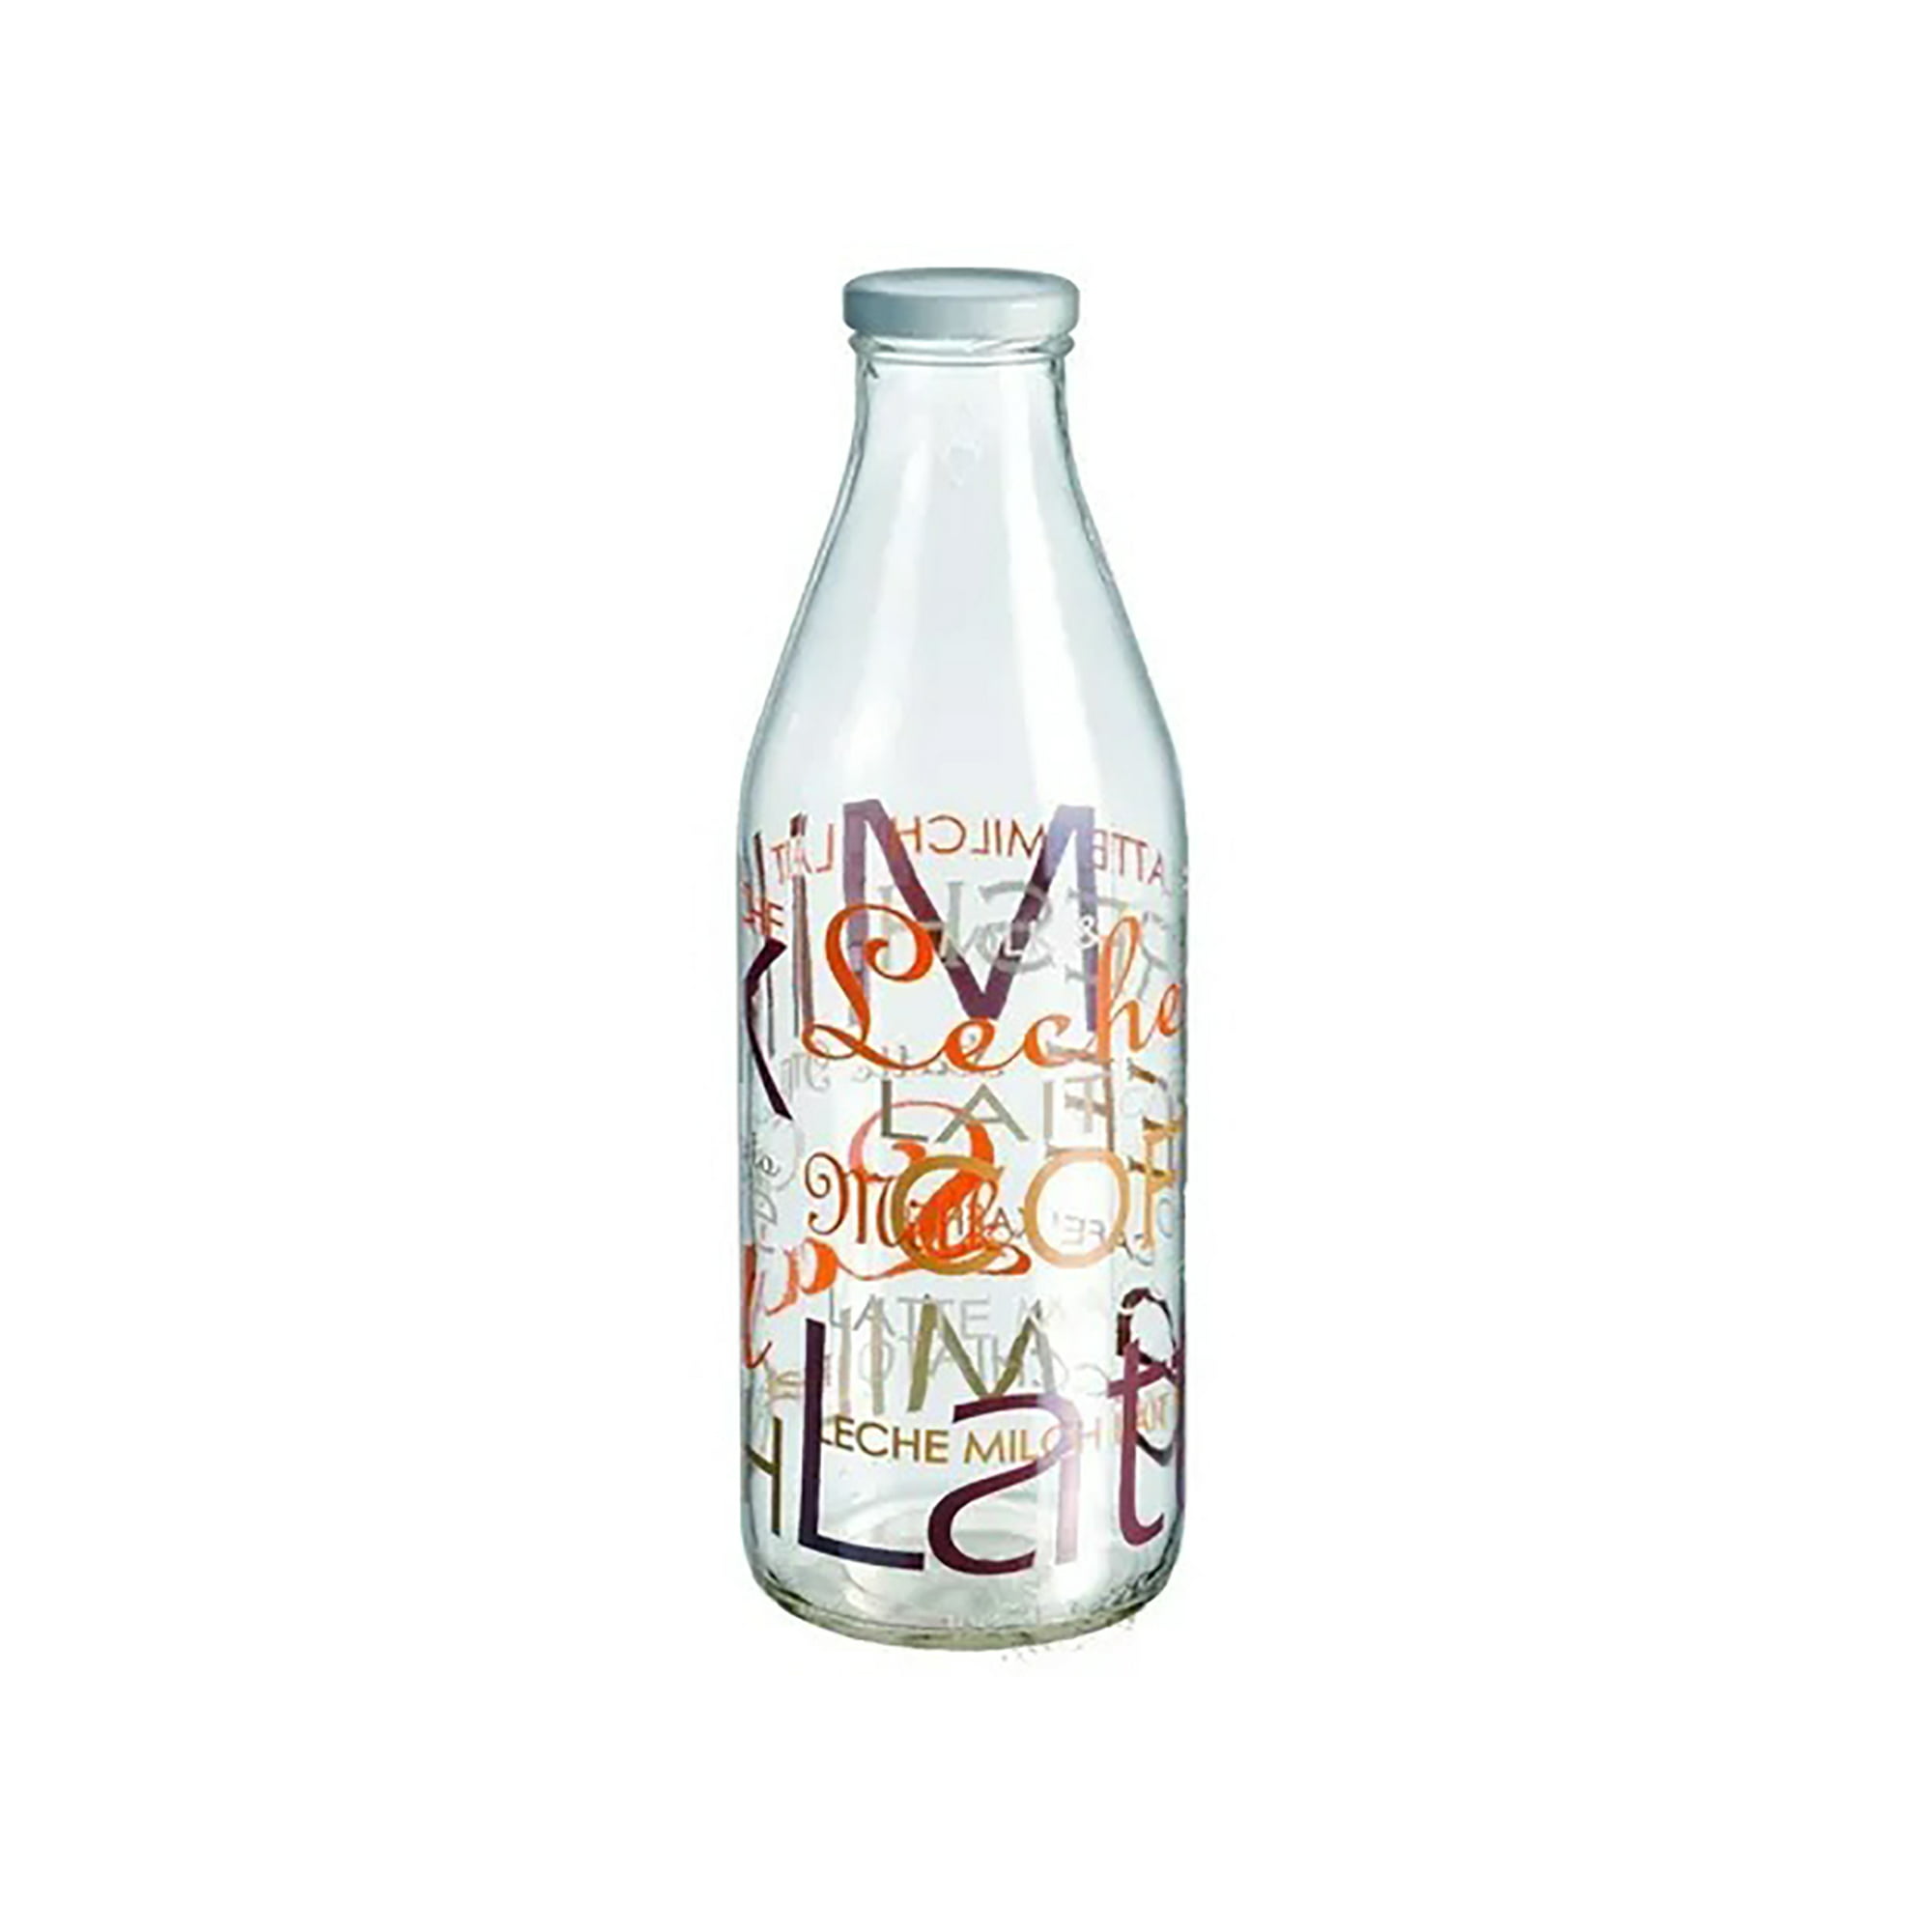 Pack 12 Botellas Cristal Agua Decorada c/Tapa Acero 1 litro